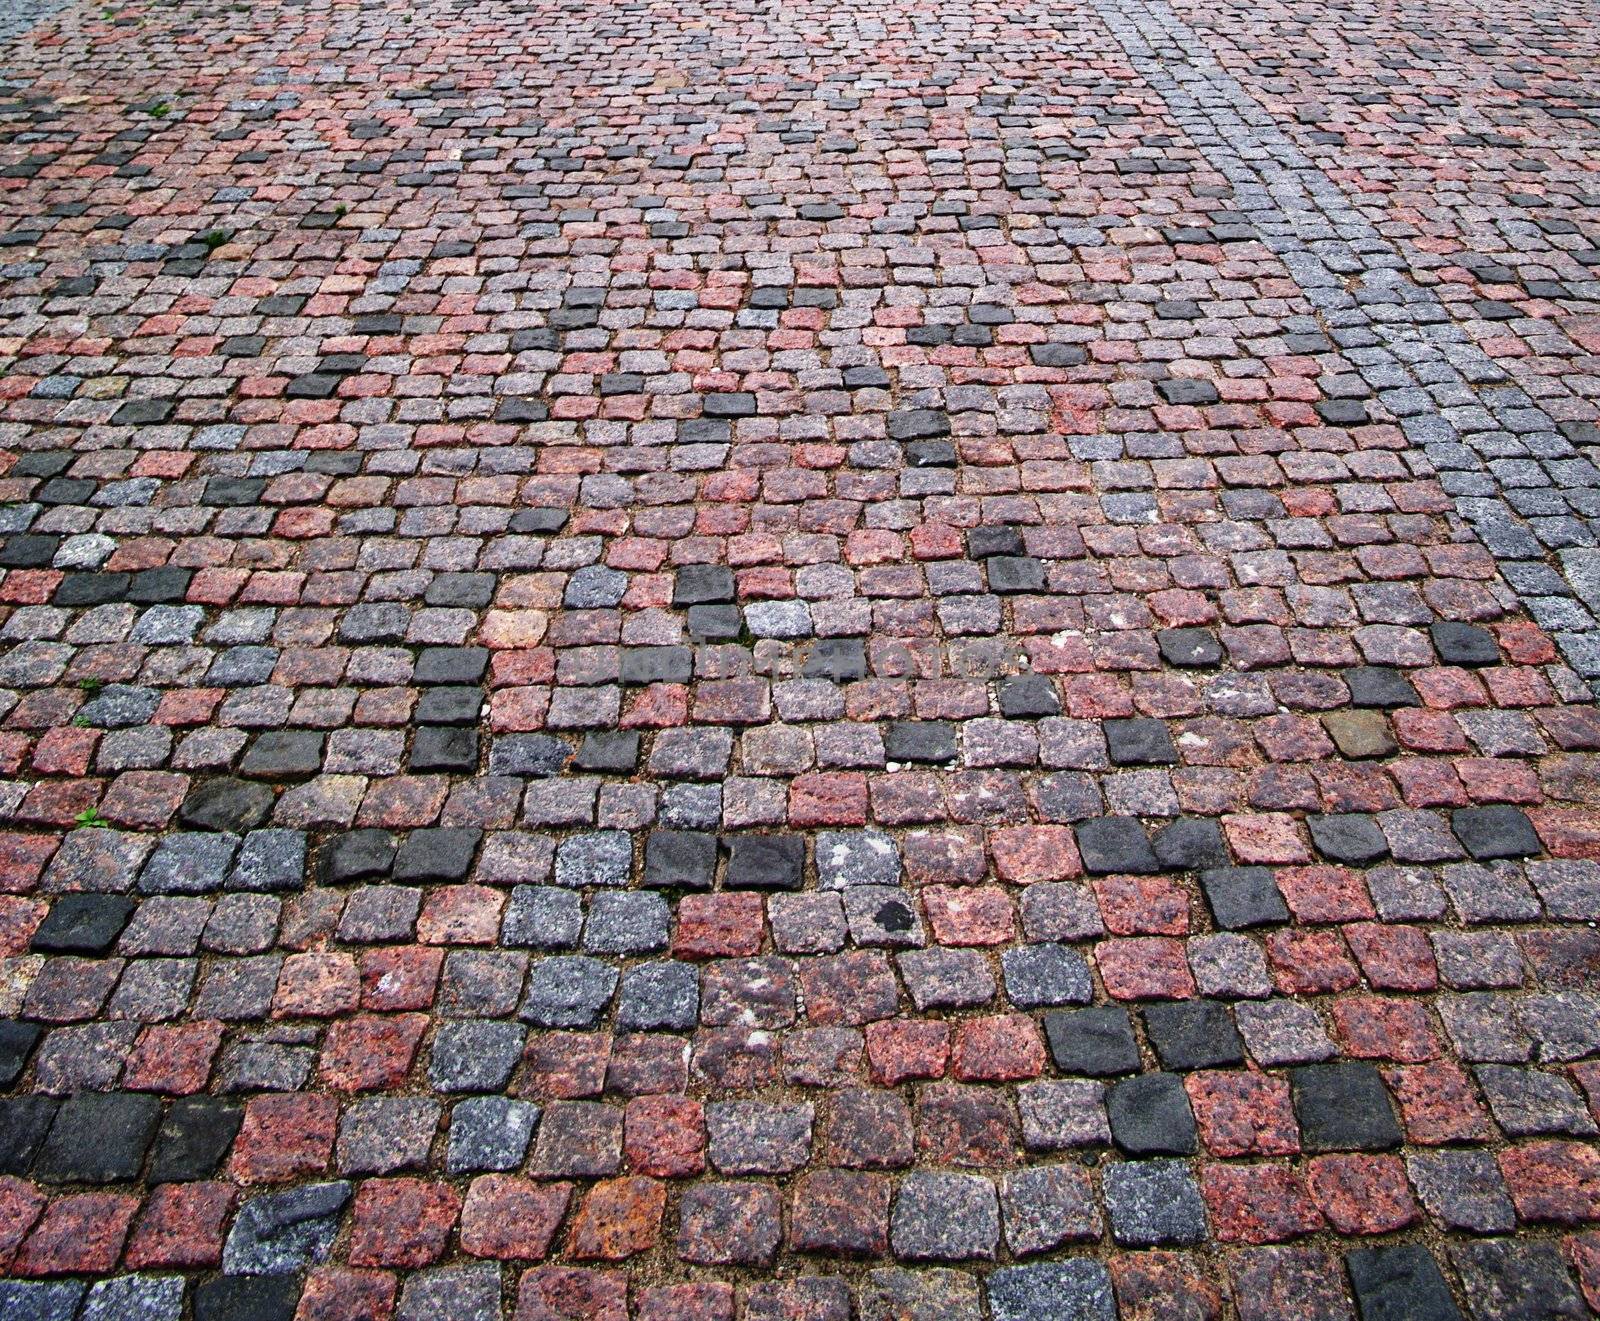 Old cobblestone pavement texture, background horizontal